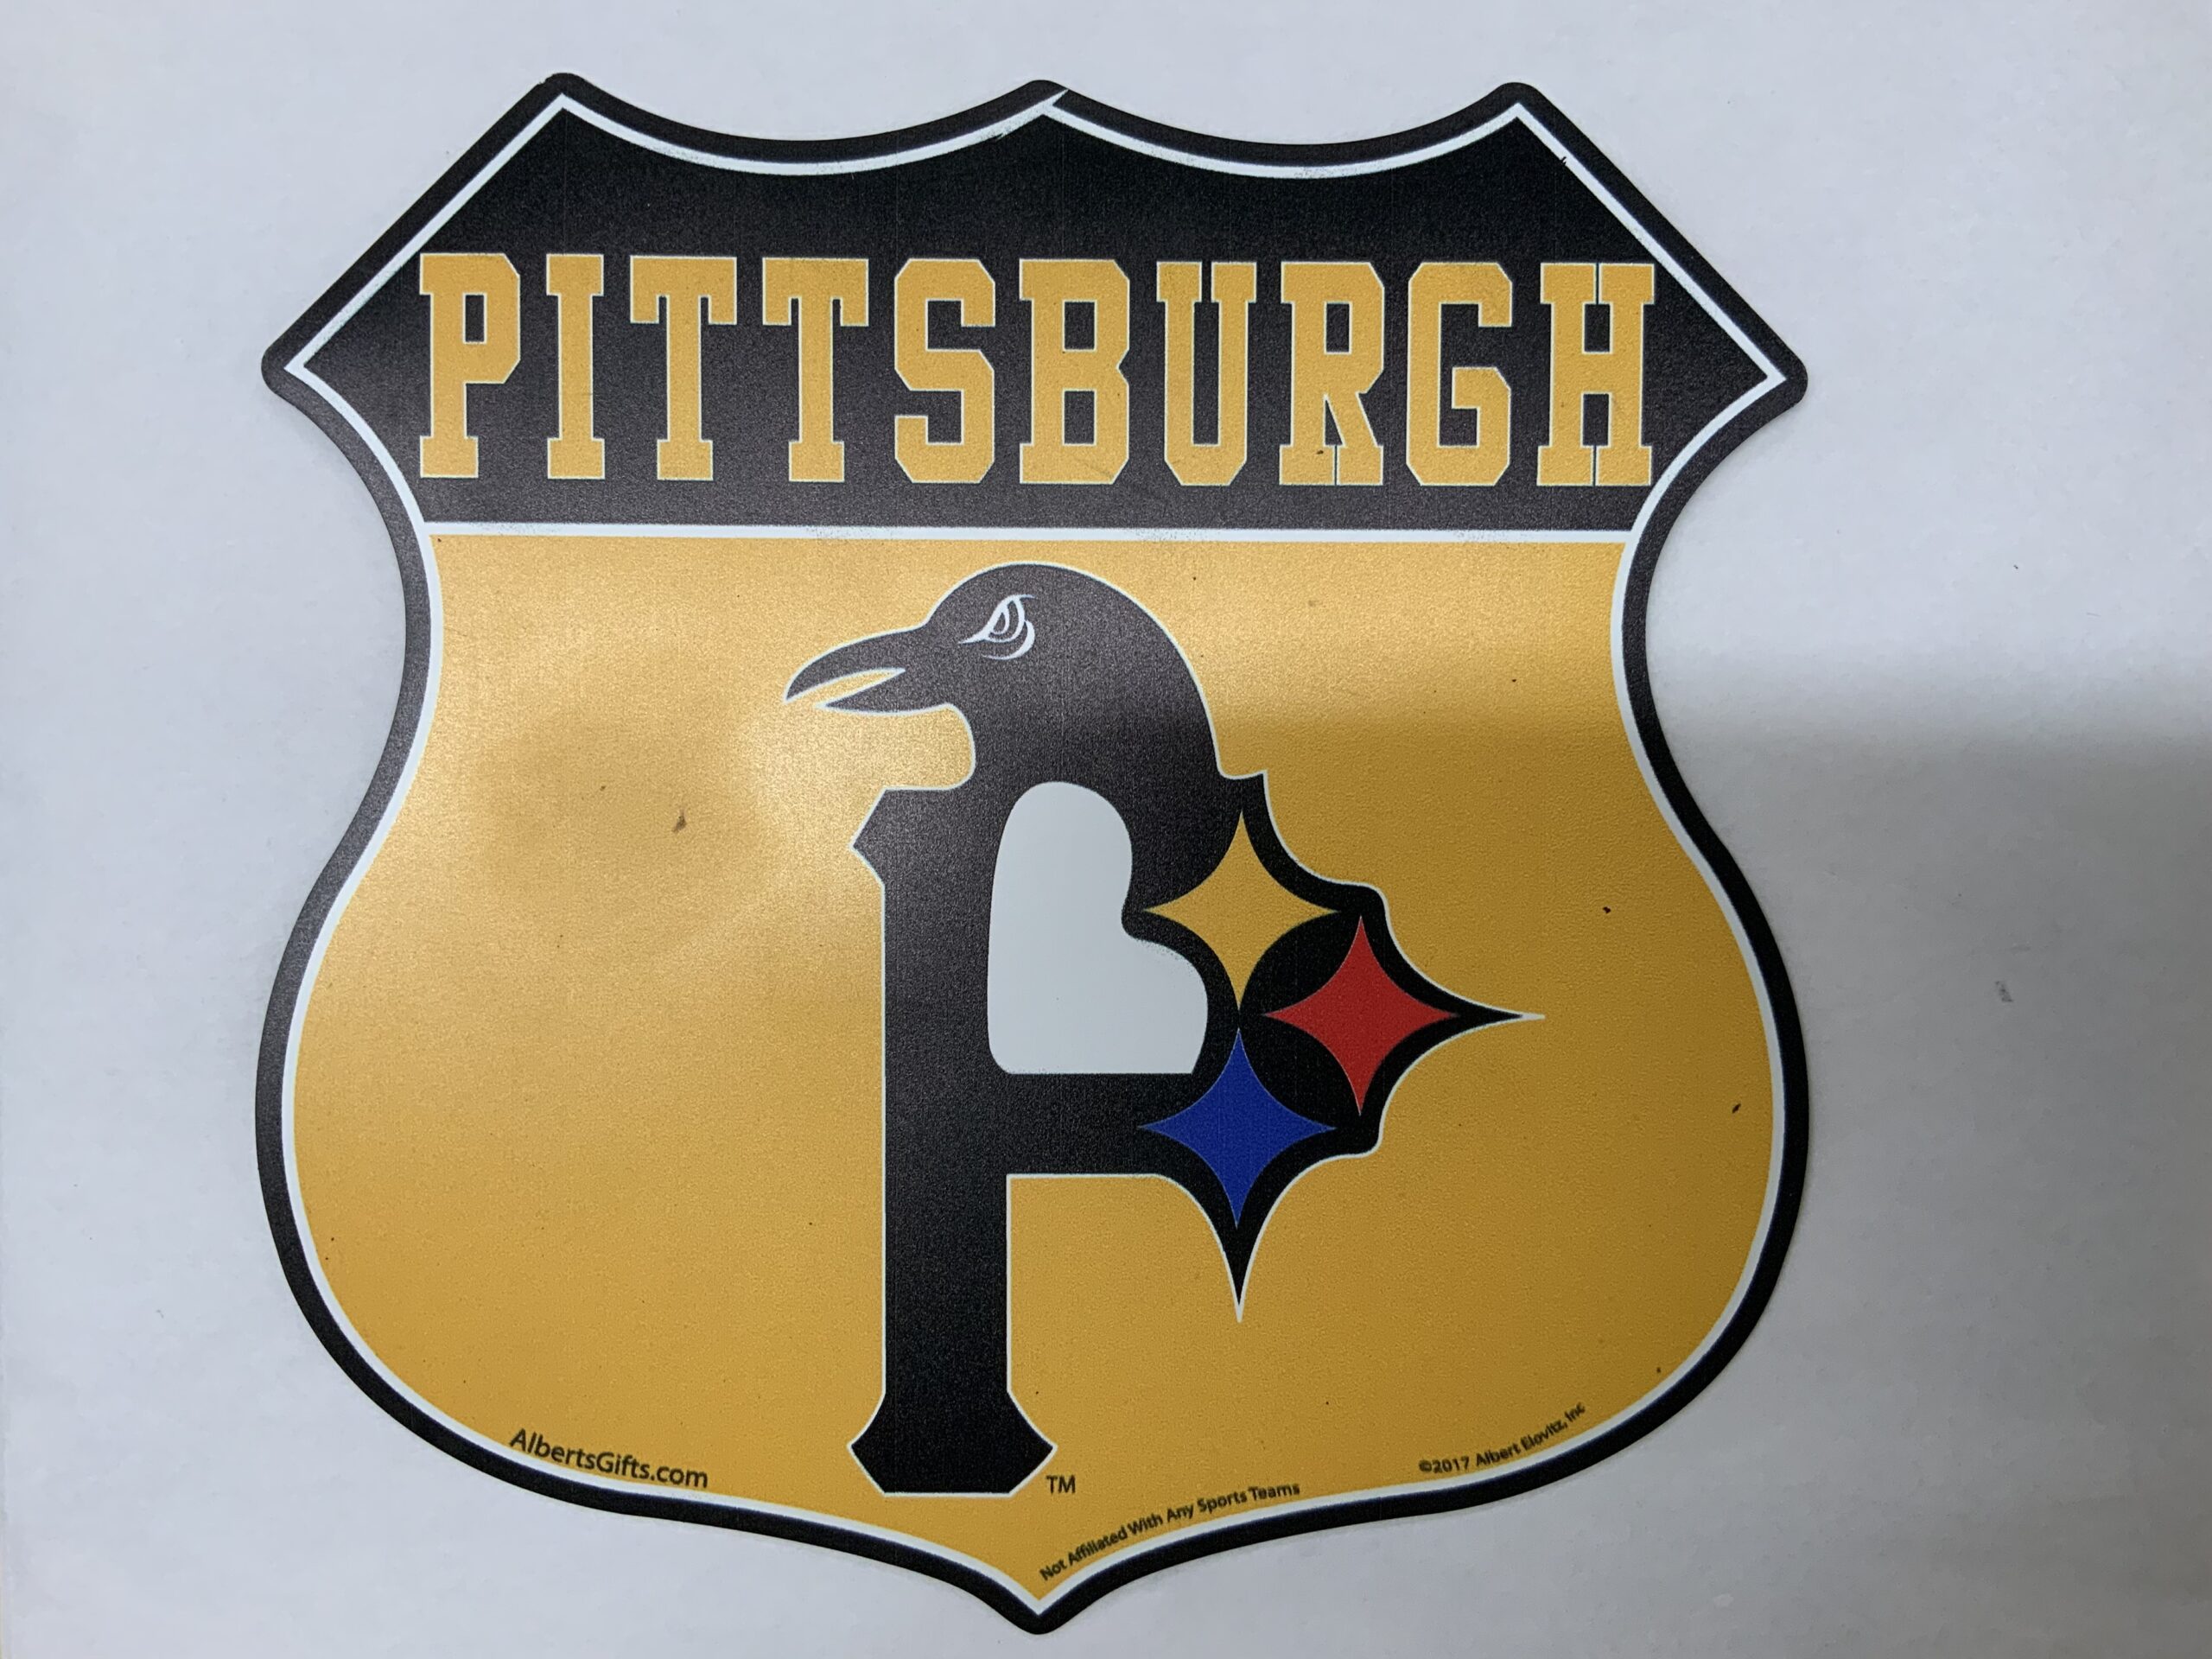 Pittsburgh Sports Teams